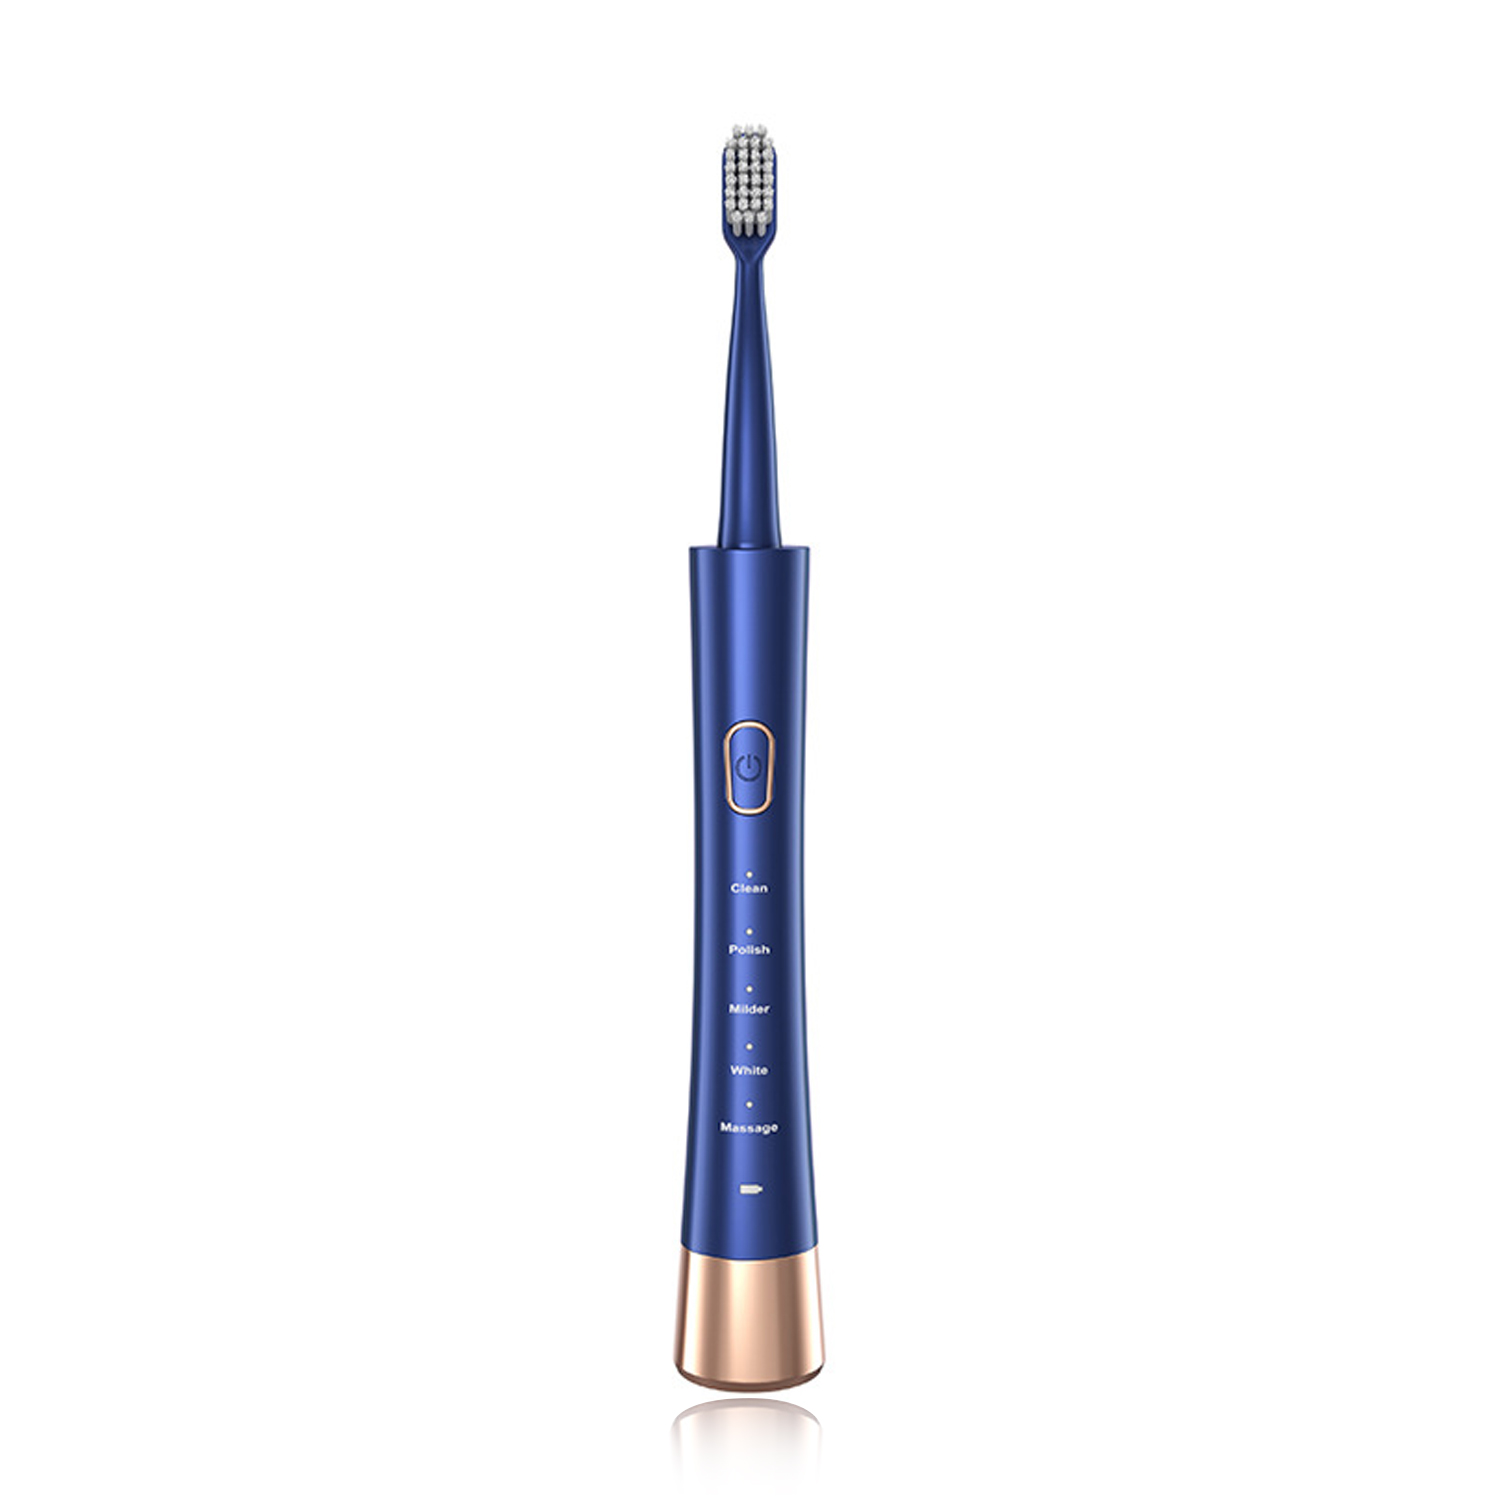 TBYou Cepillo de dientes eléctrico, 5 modos de limpieza,、recargable por USB, IPX7 resistente al agua cepillo electrico.